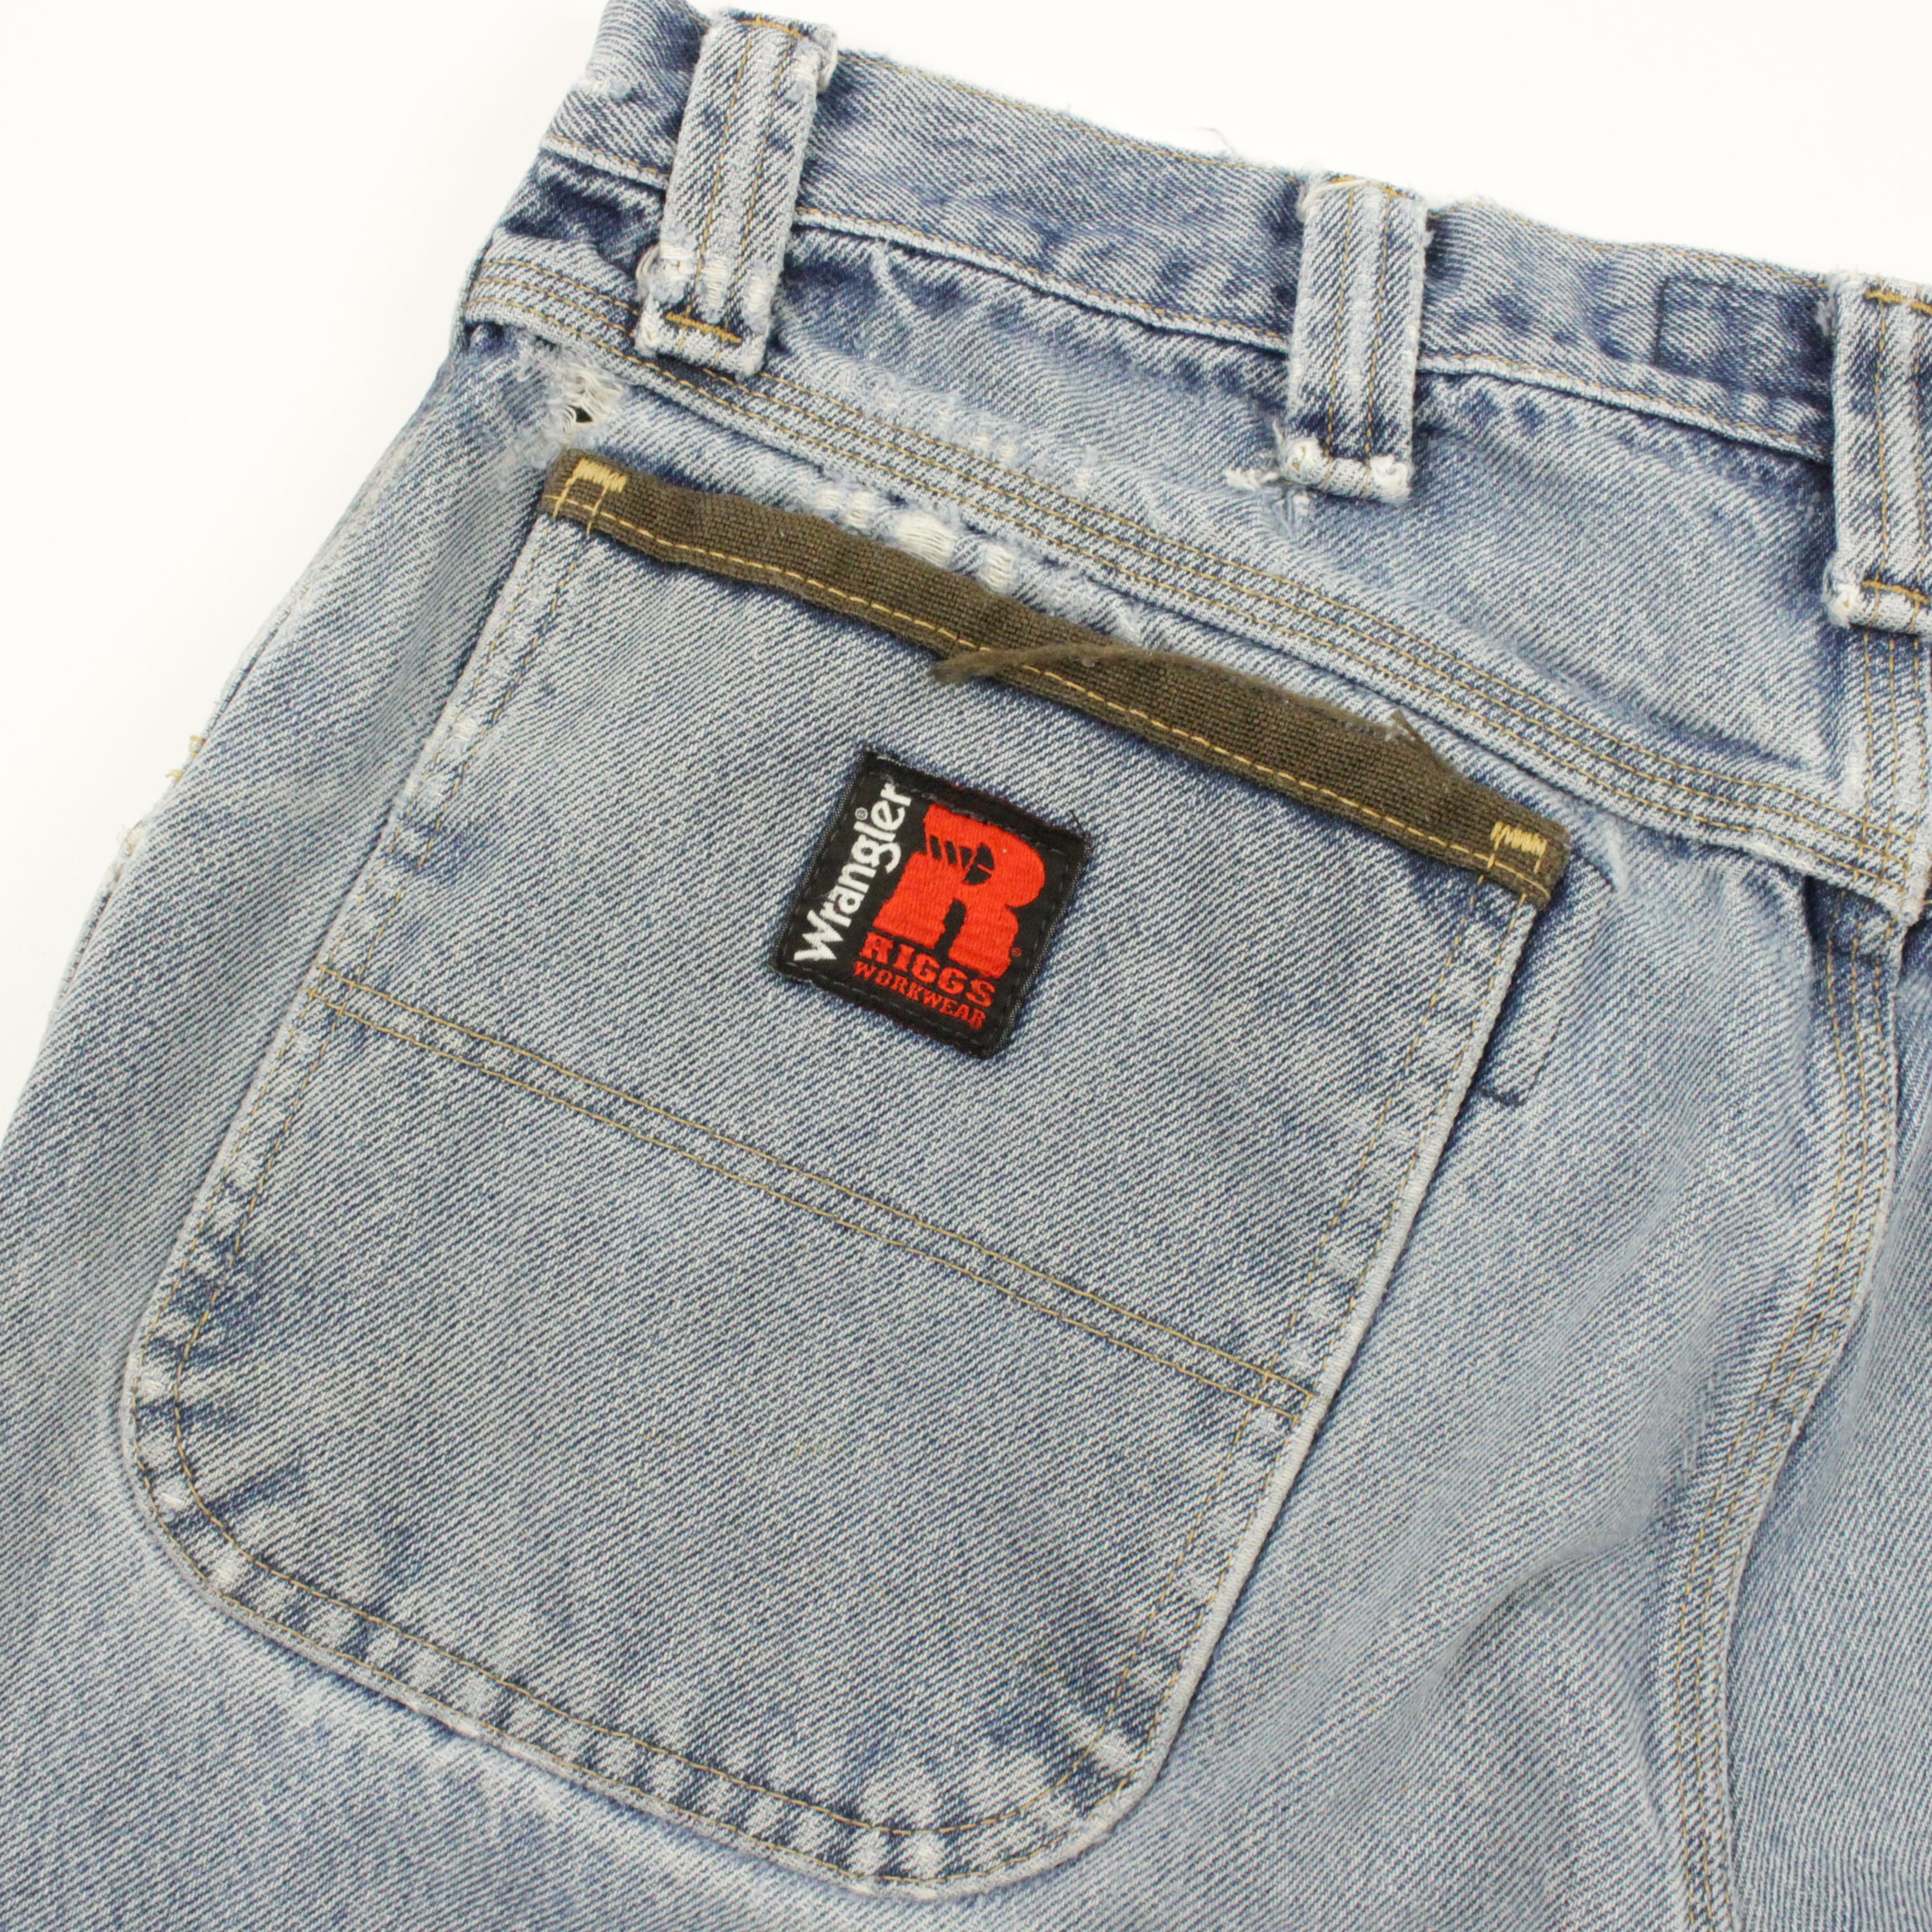 Vintage Wrangler Riggs Workwear Distressed Denim Jeans Size 34 x 34